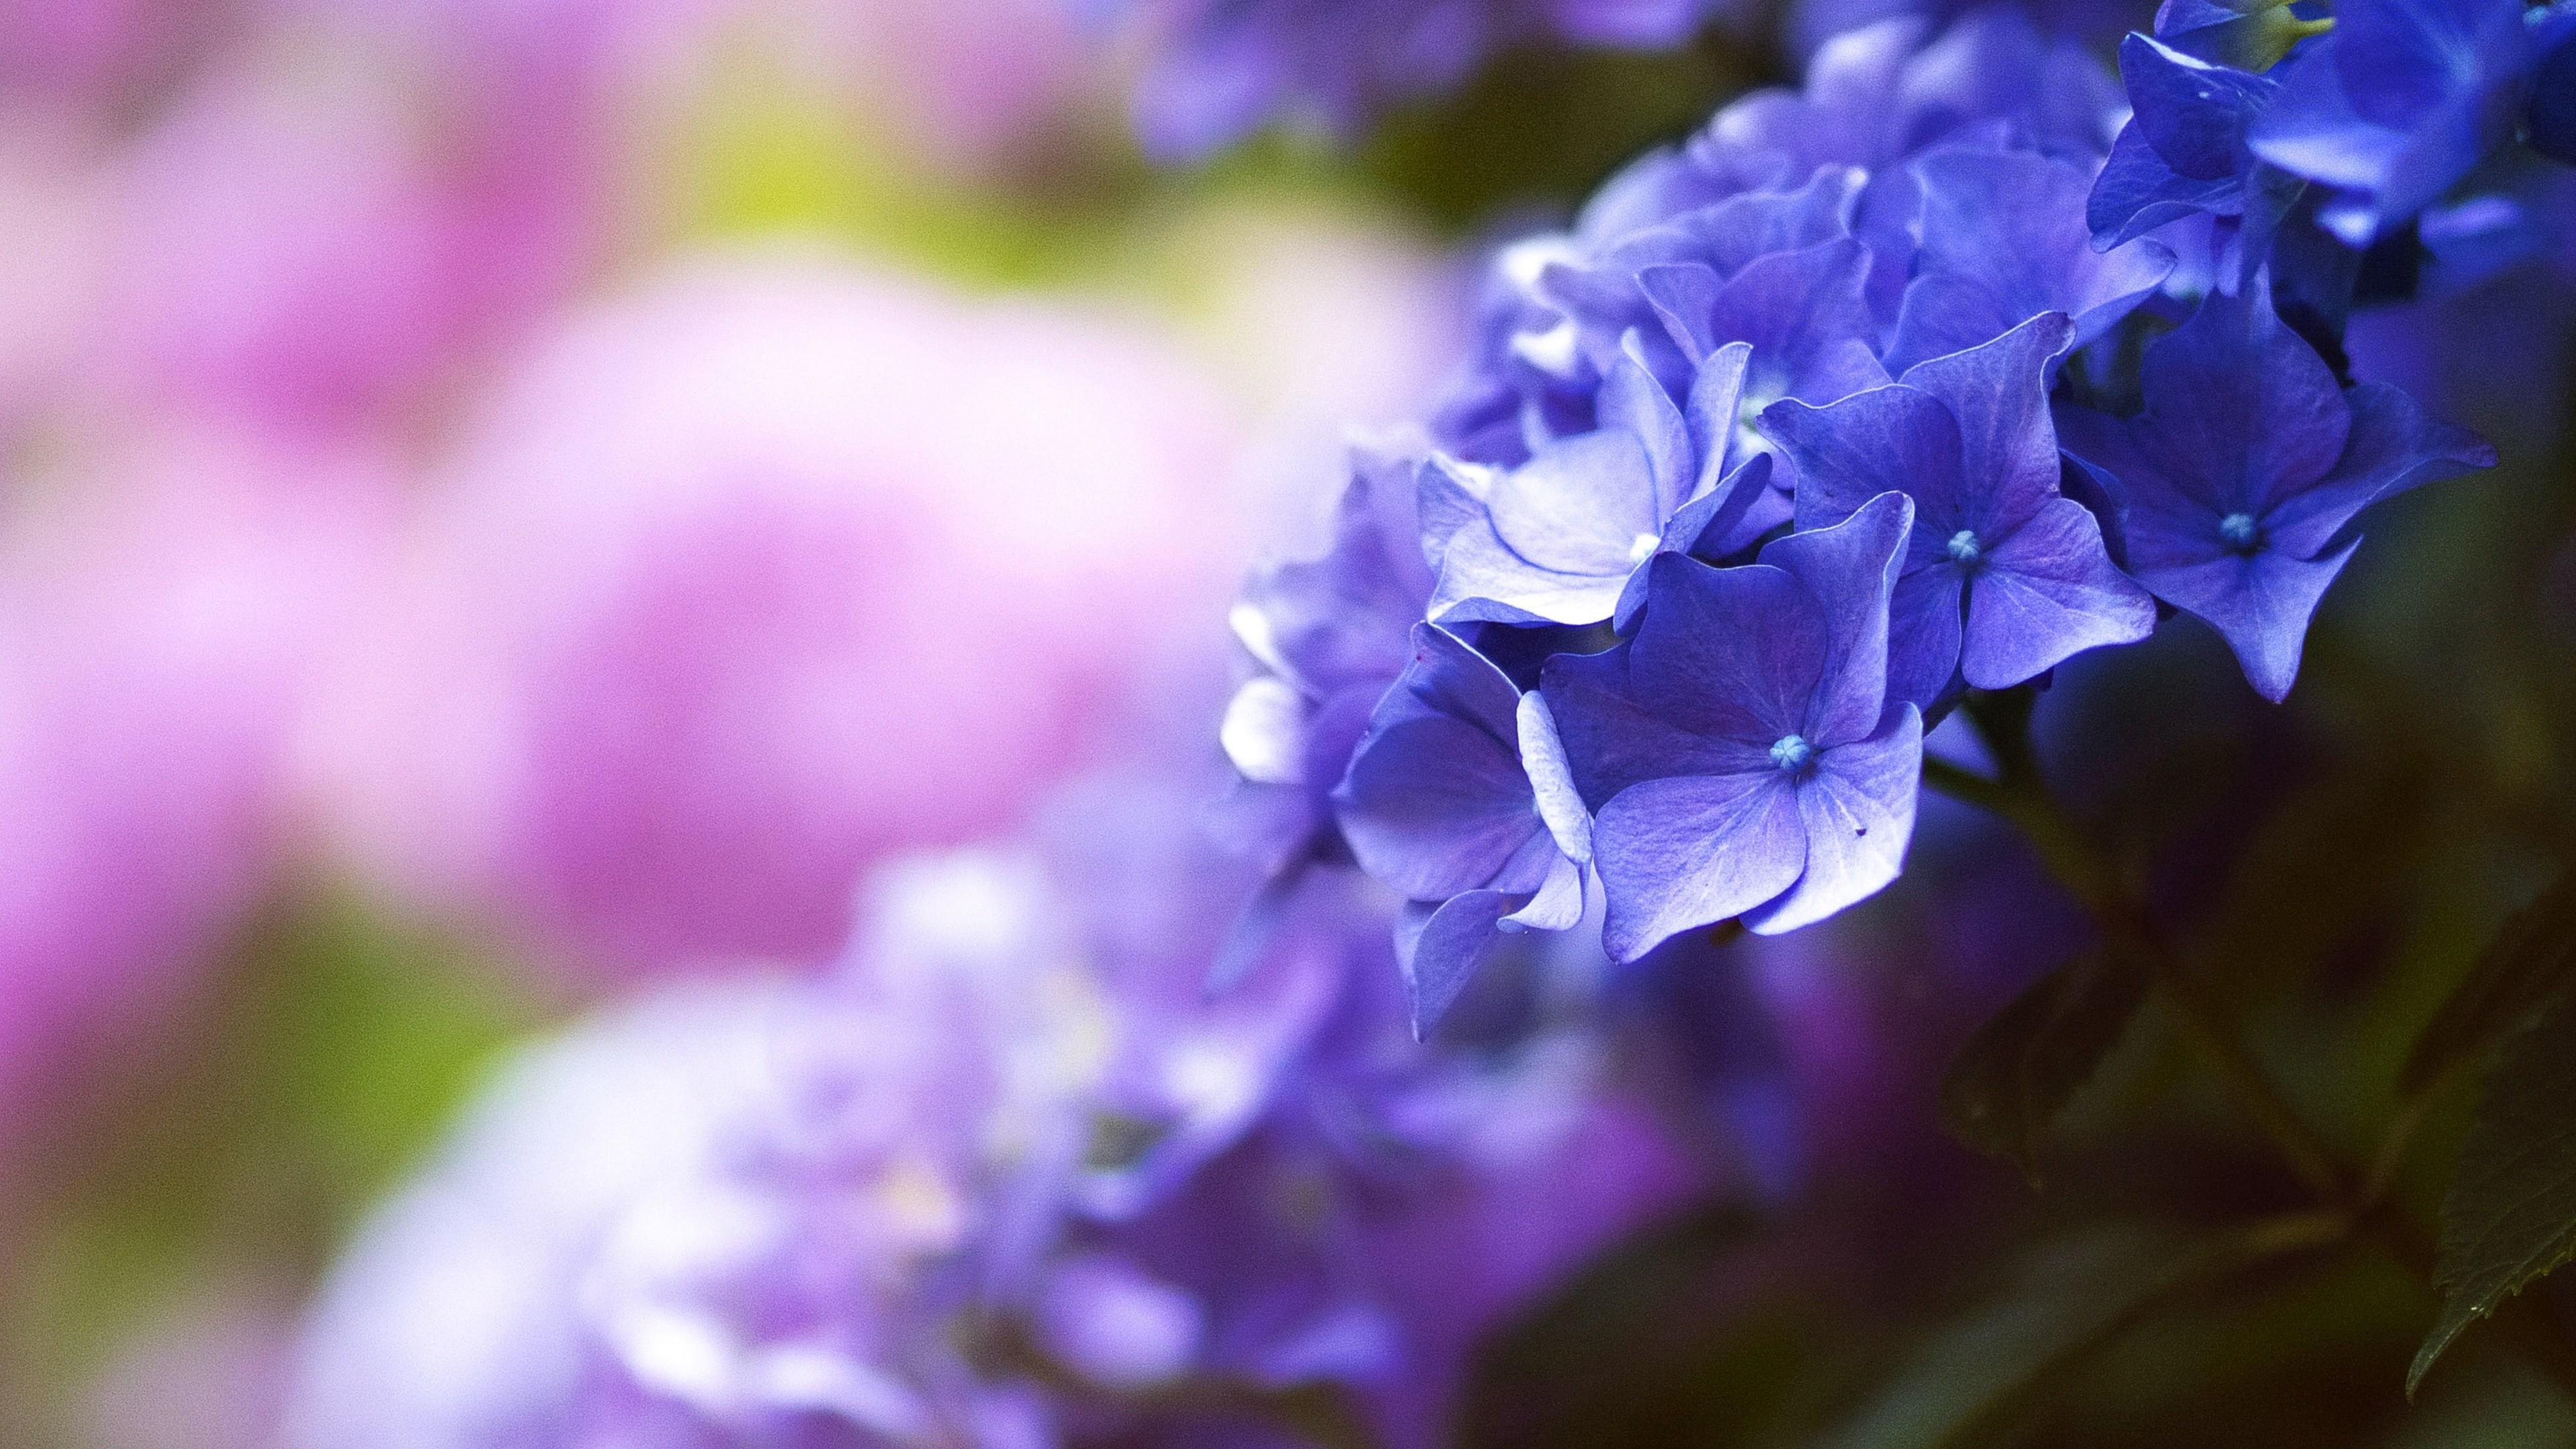 HD wallpaper, Close Up, 4K, Purple Flower, Nature, 3840X2160